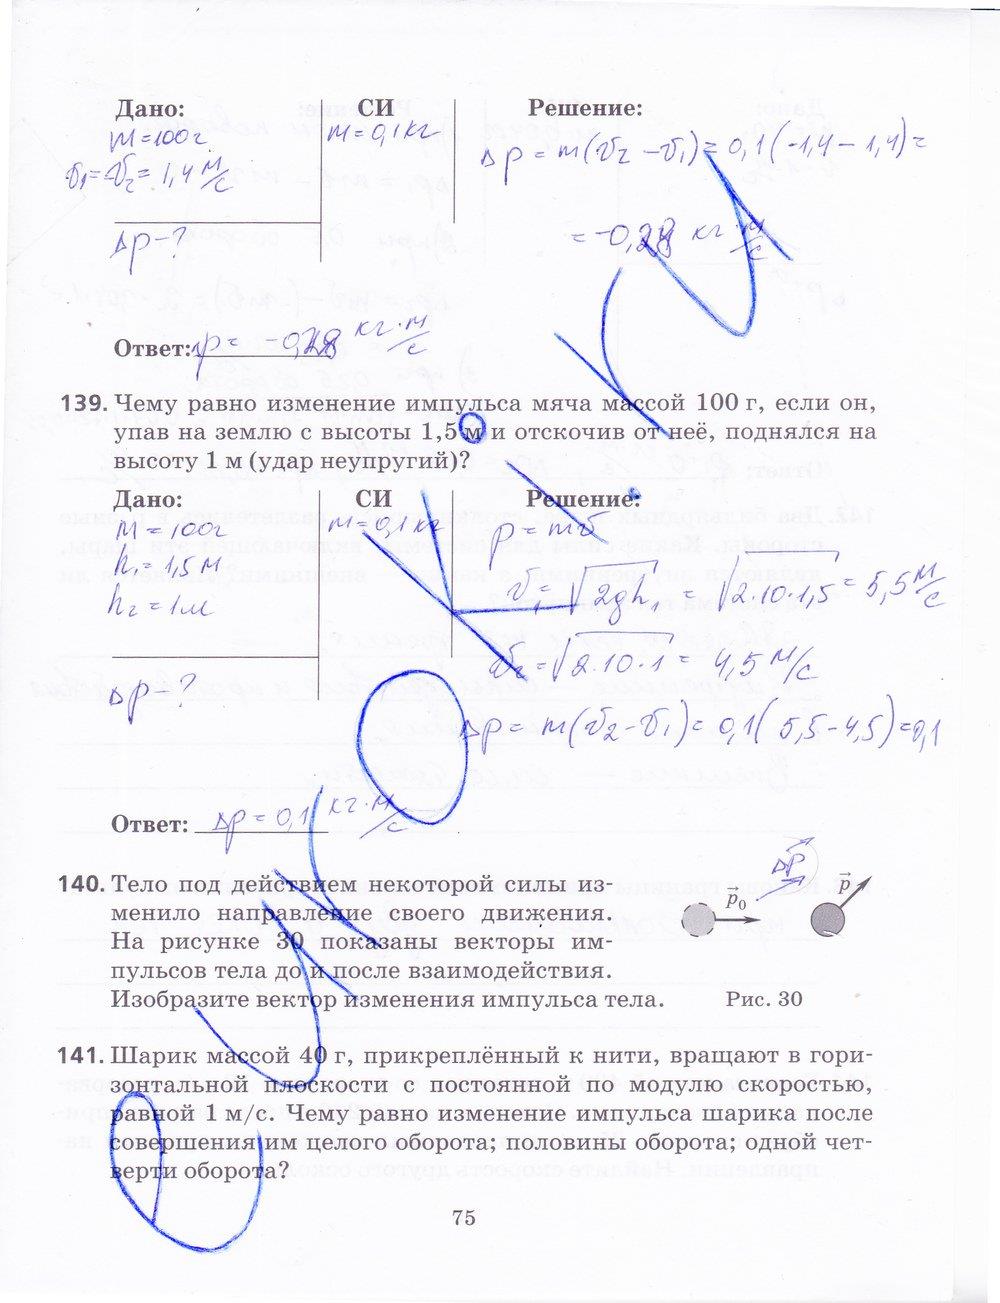 гдз 9 класс рабочая тетрадь страница 75 физика Пурышева, Важеевская, Чаругин